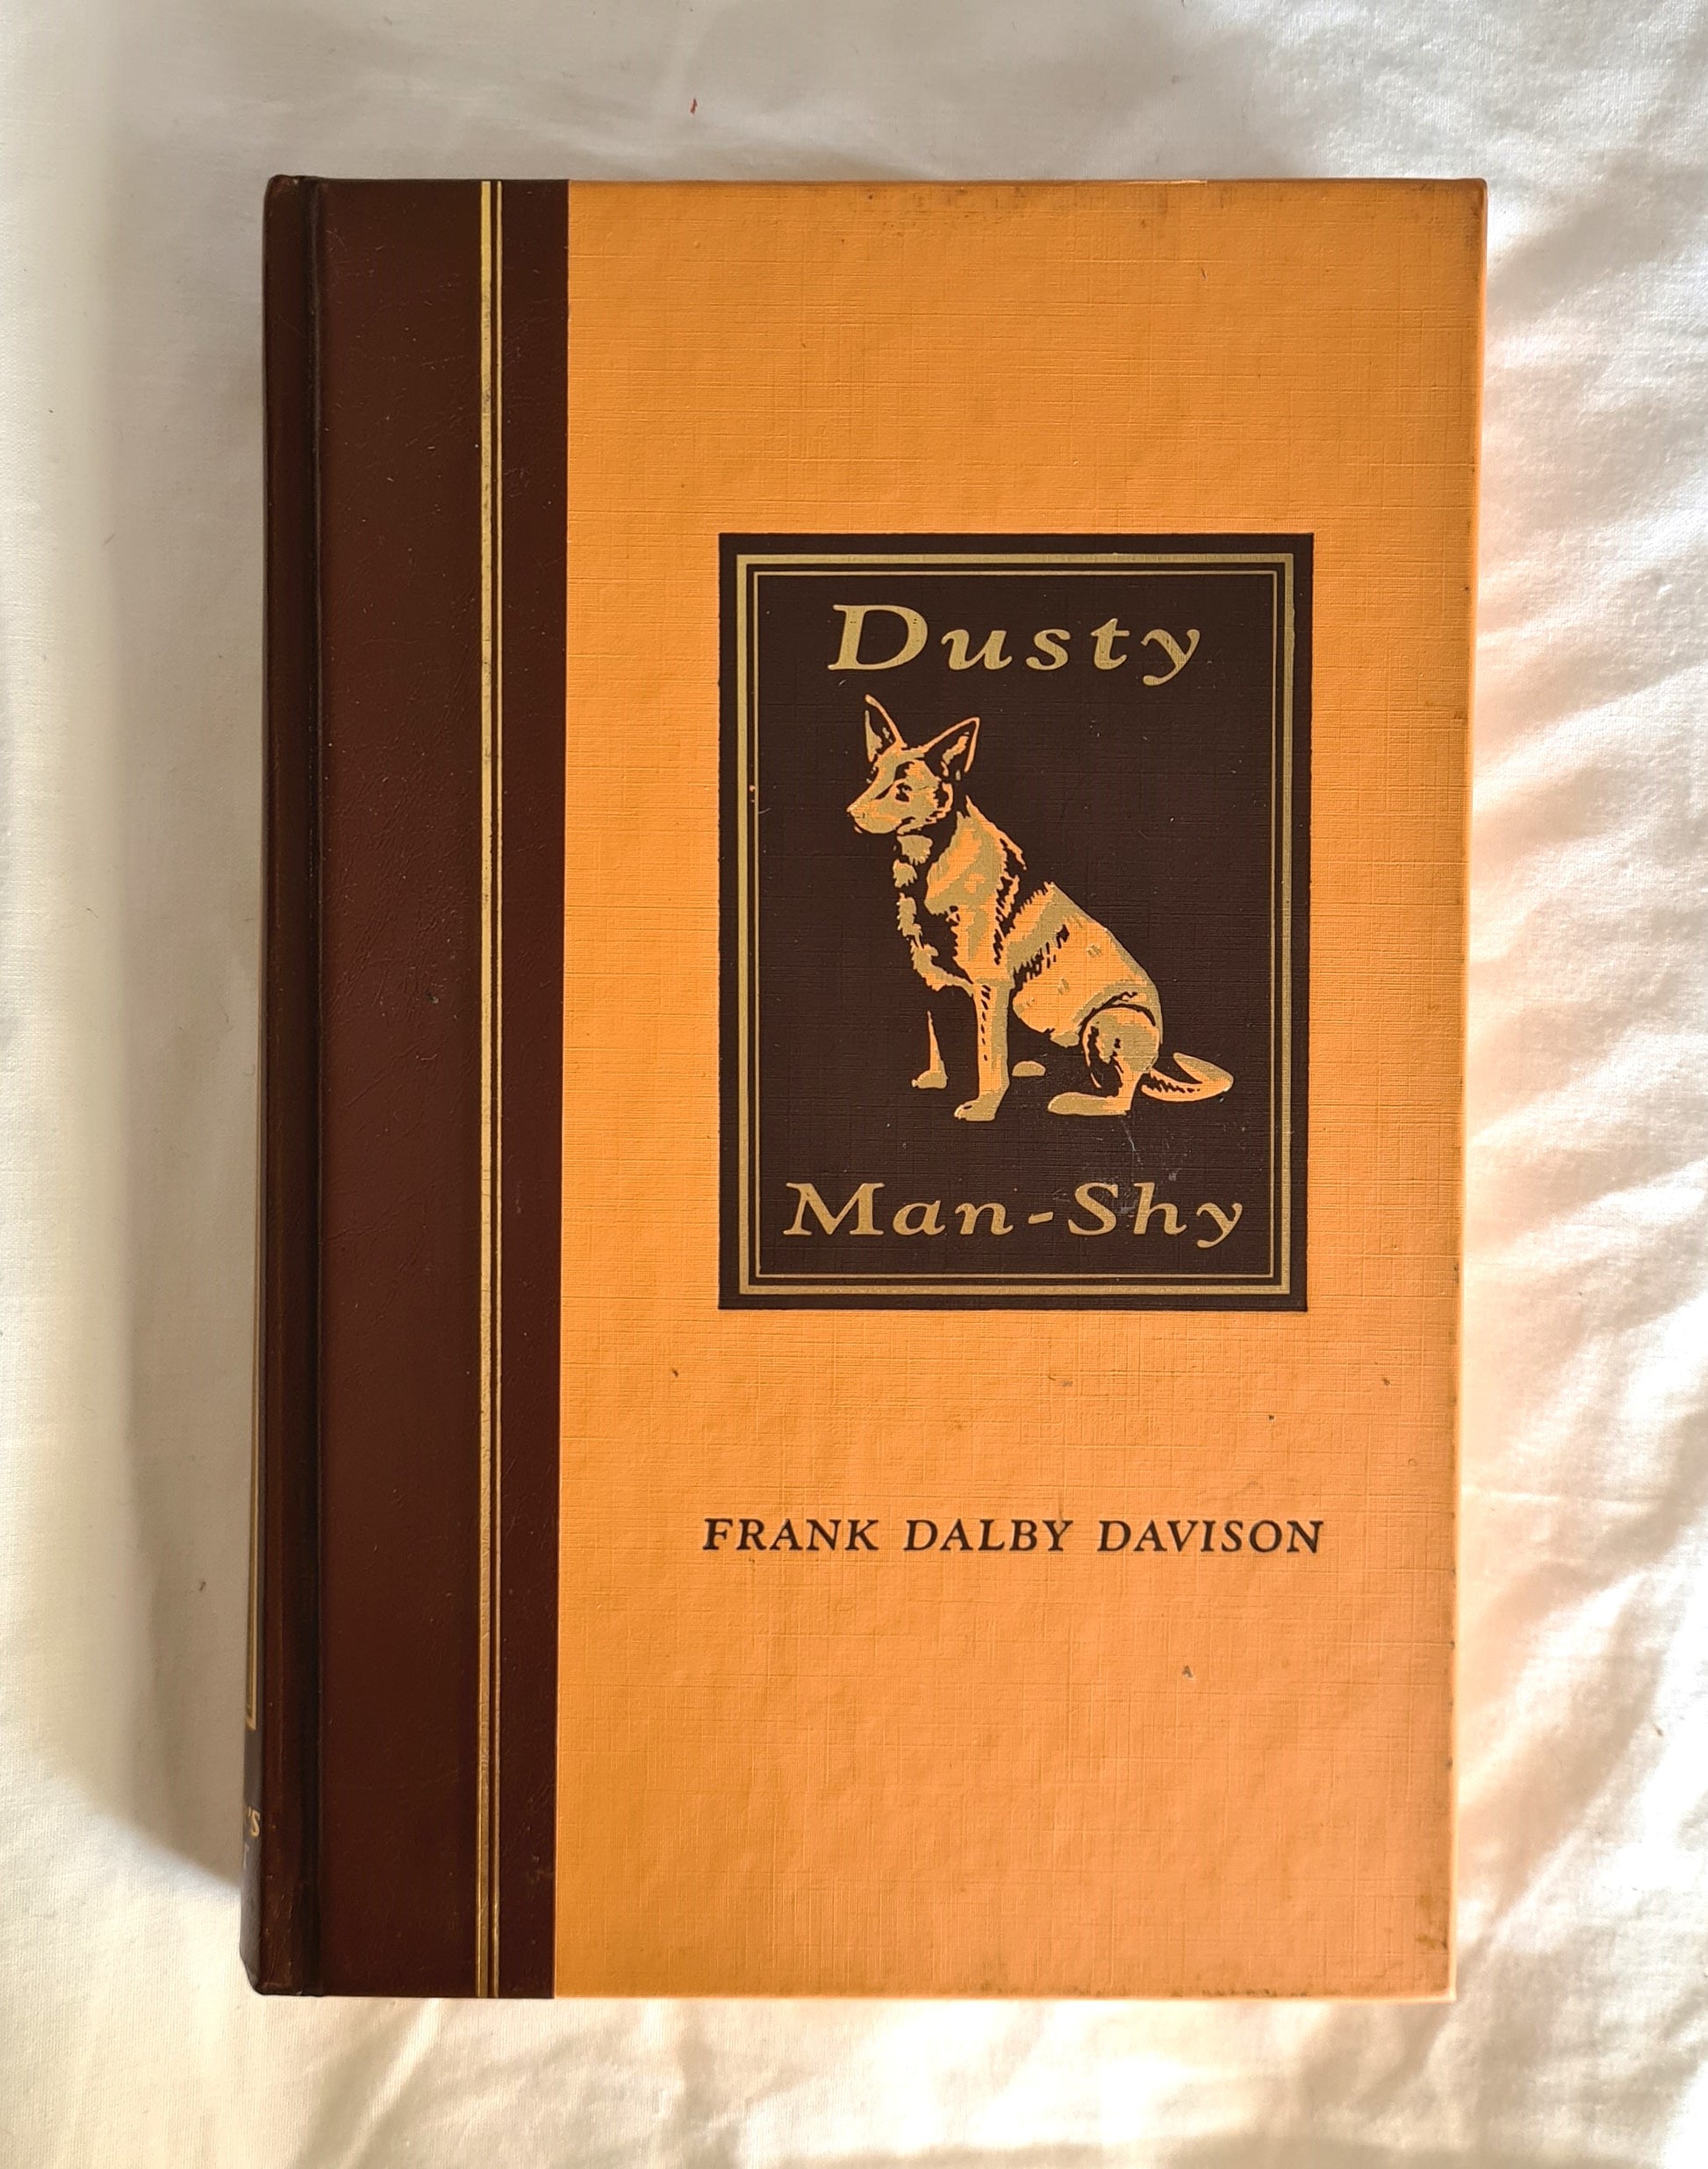 Dusty ~ Man-Shy  by Frank Dalby Davison  Illustrations by Tony Pyrzakowski